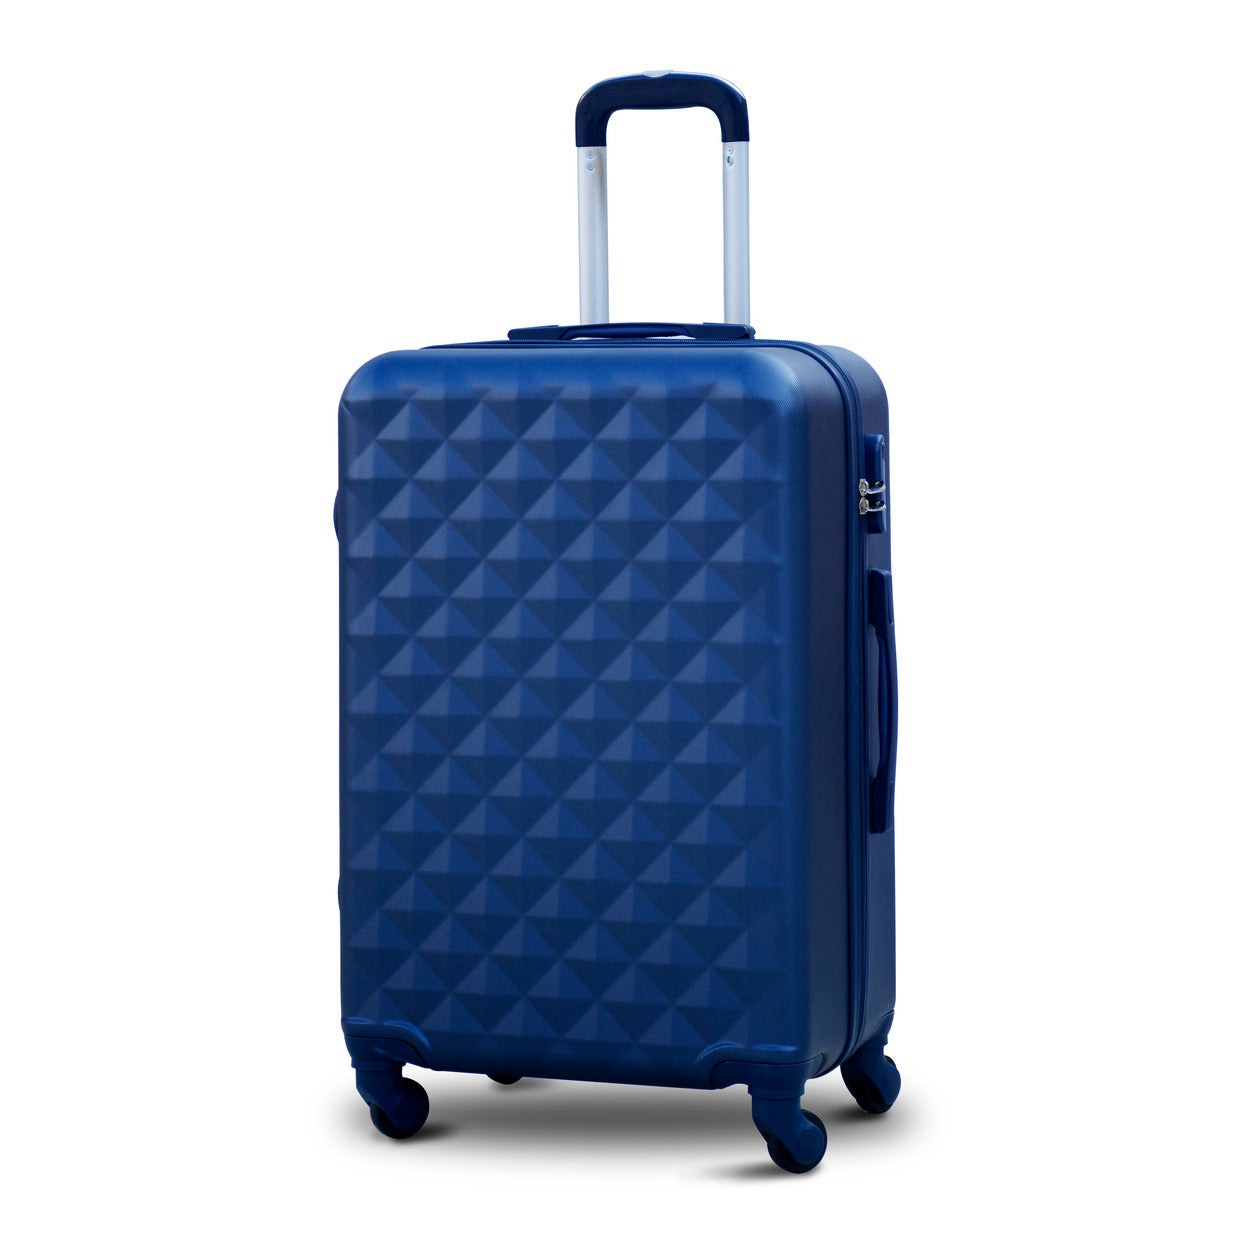 24" Blue Colour Diamond Cut ABS Luggage Lightweight Hard Case Spinner Wheel Trolley Bag